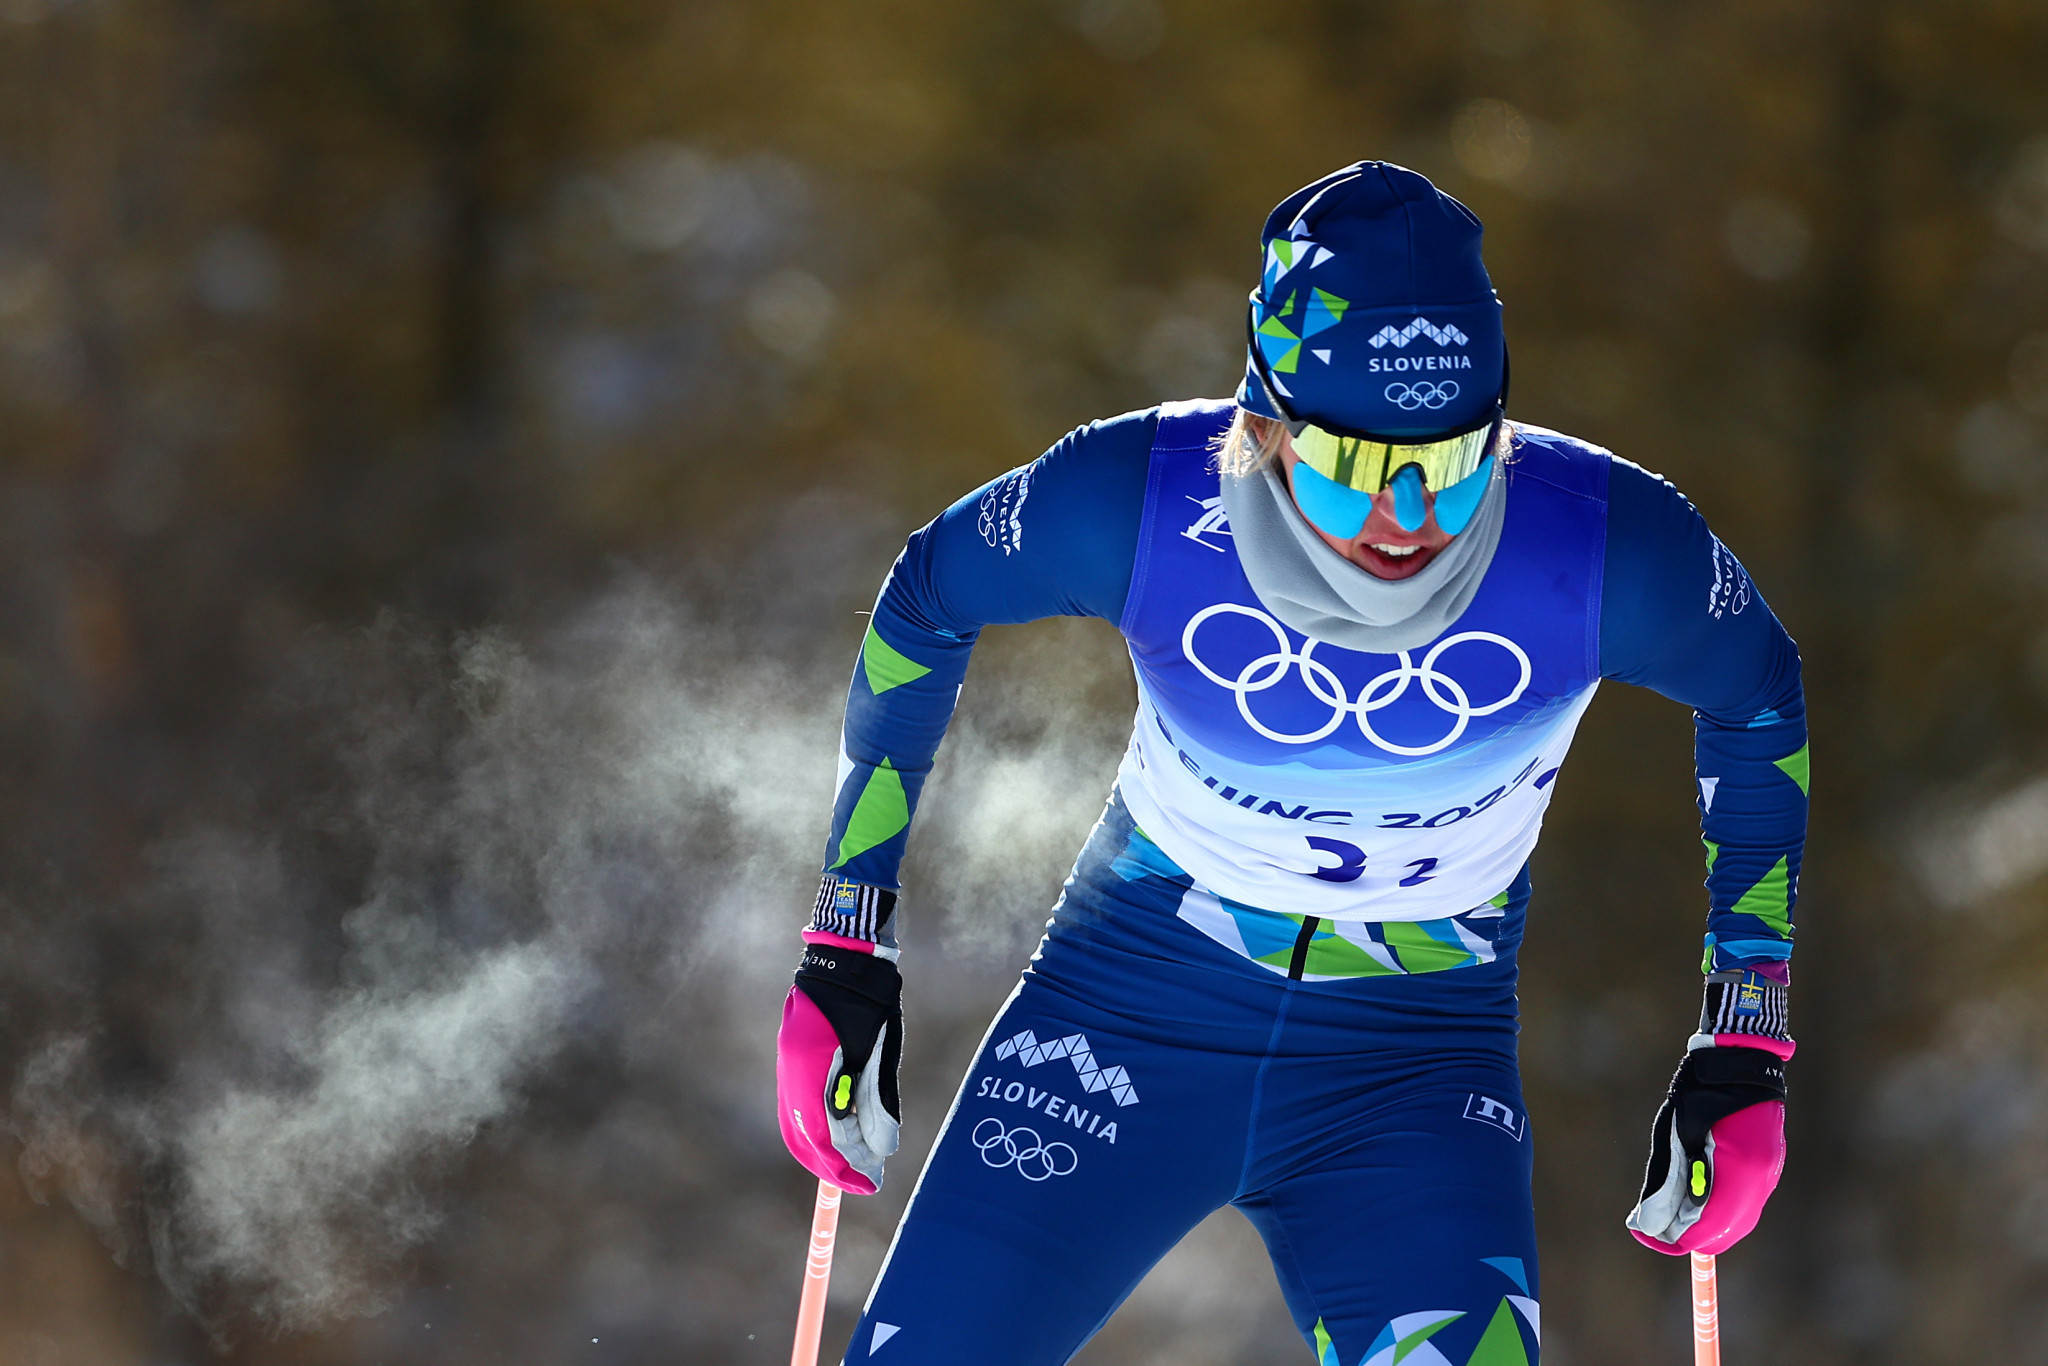 Sprint World Cup winner Lampič swaps cross-country for biathlon